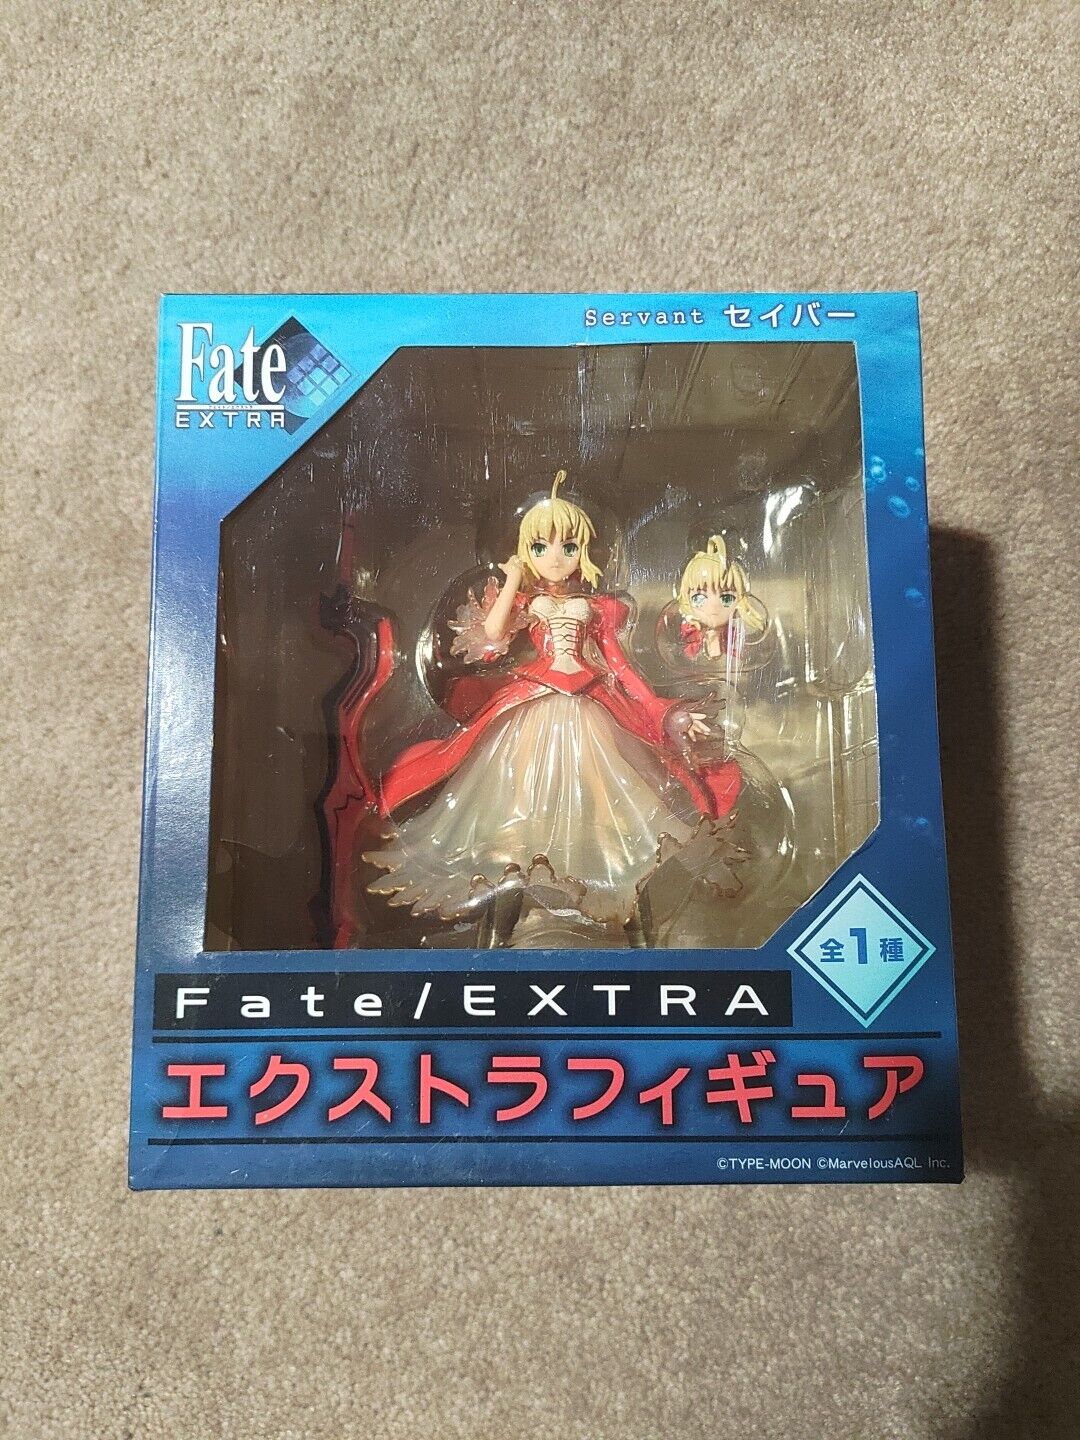 Saber Nero Claudius Figure anime Fate EXTRA SEGA from Japan